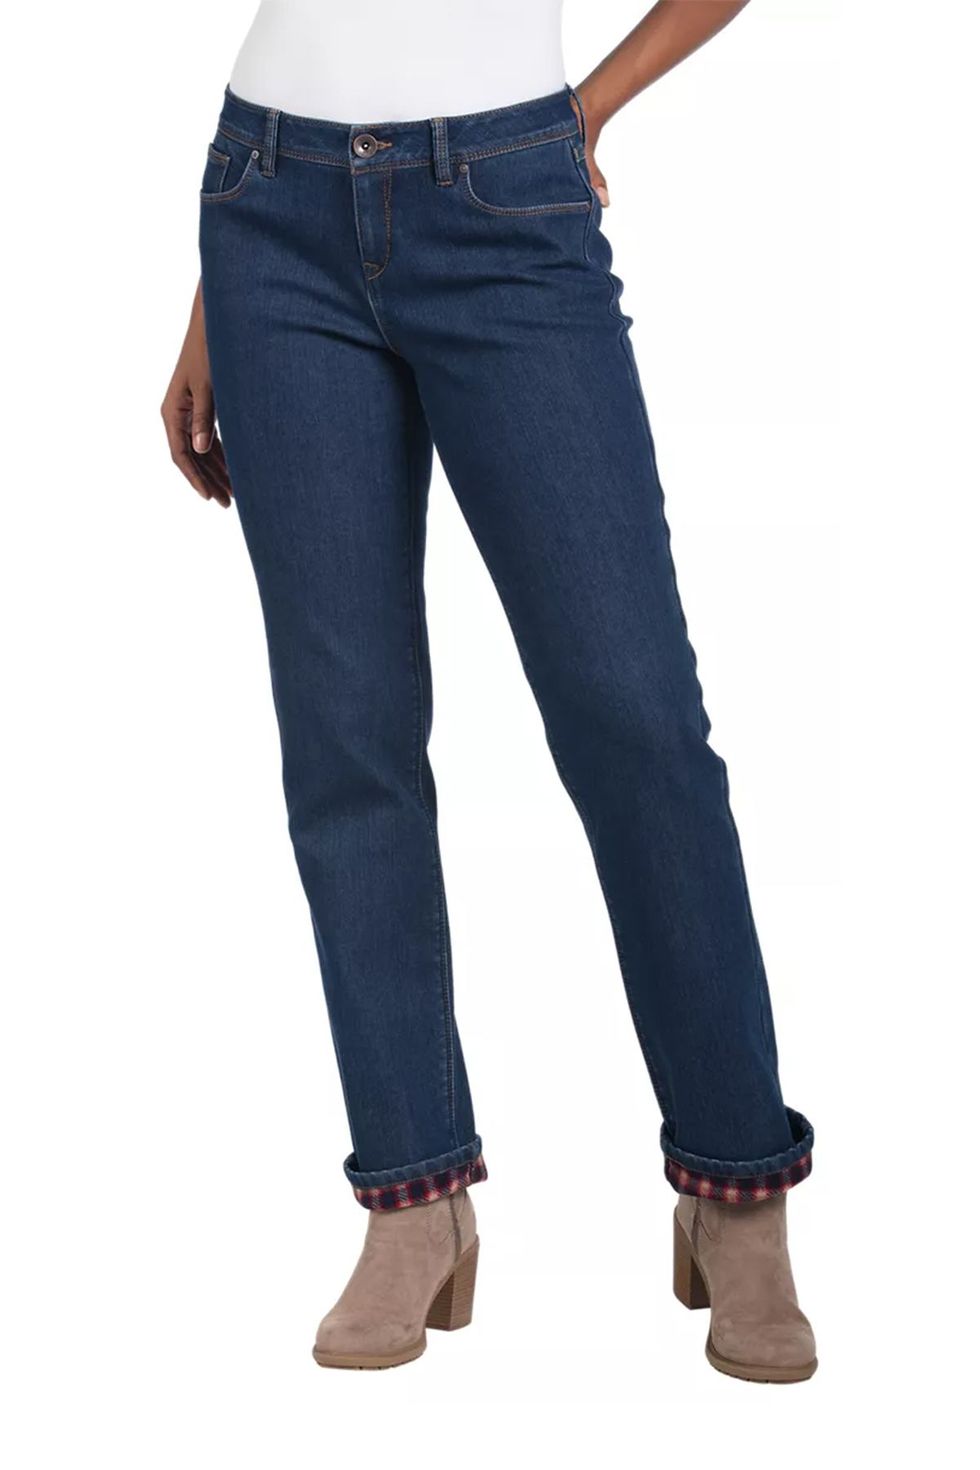 Cabela's Fleece-Lined Jeans Review 2020